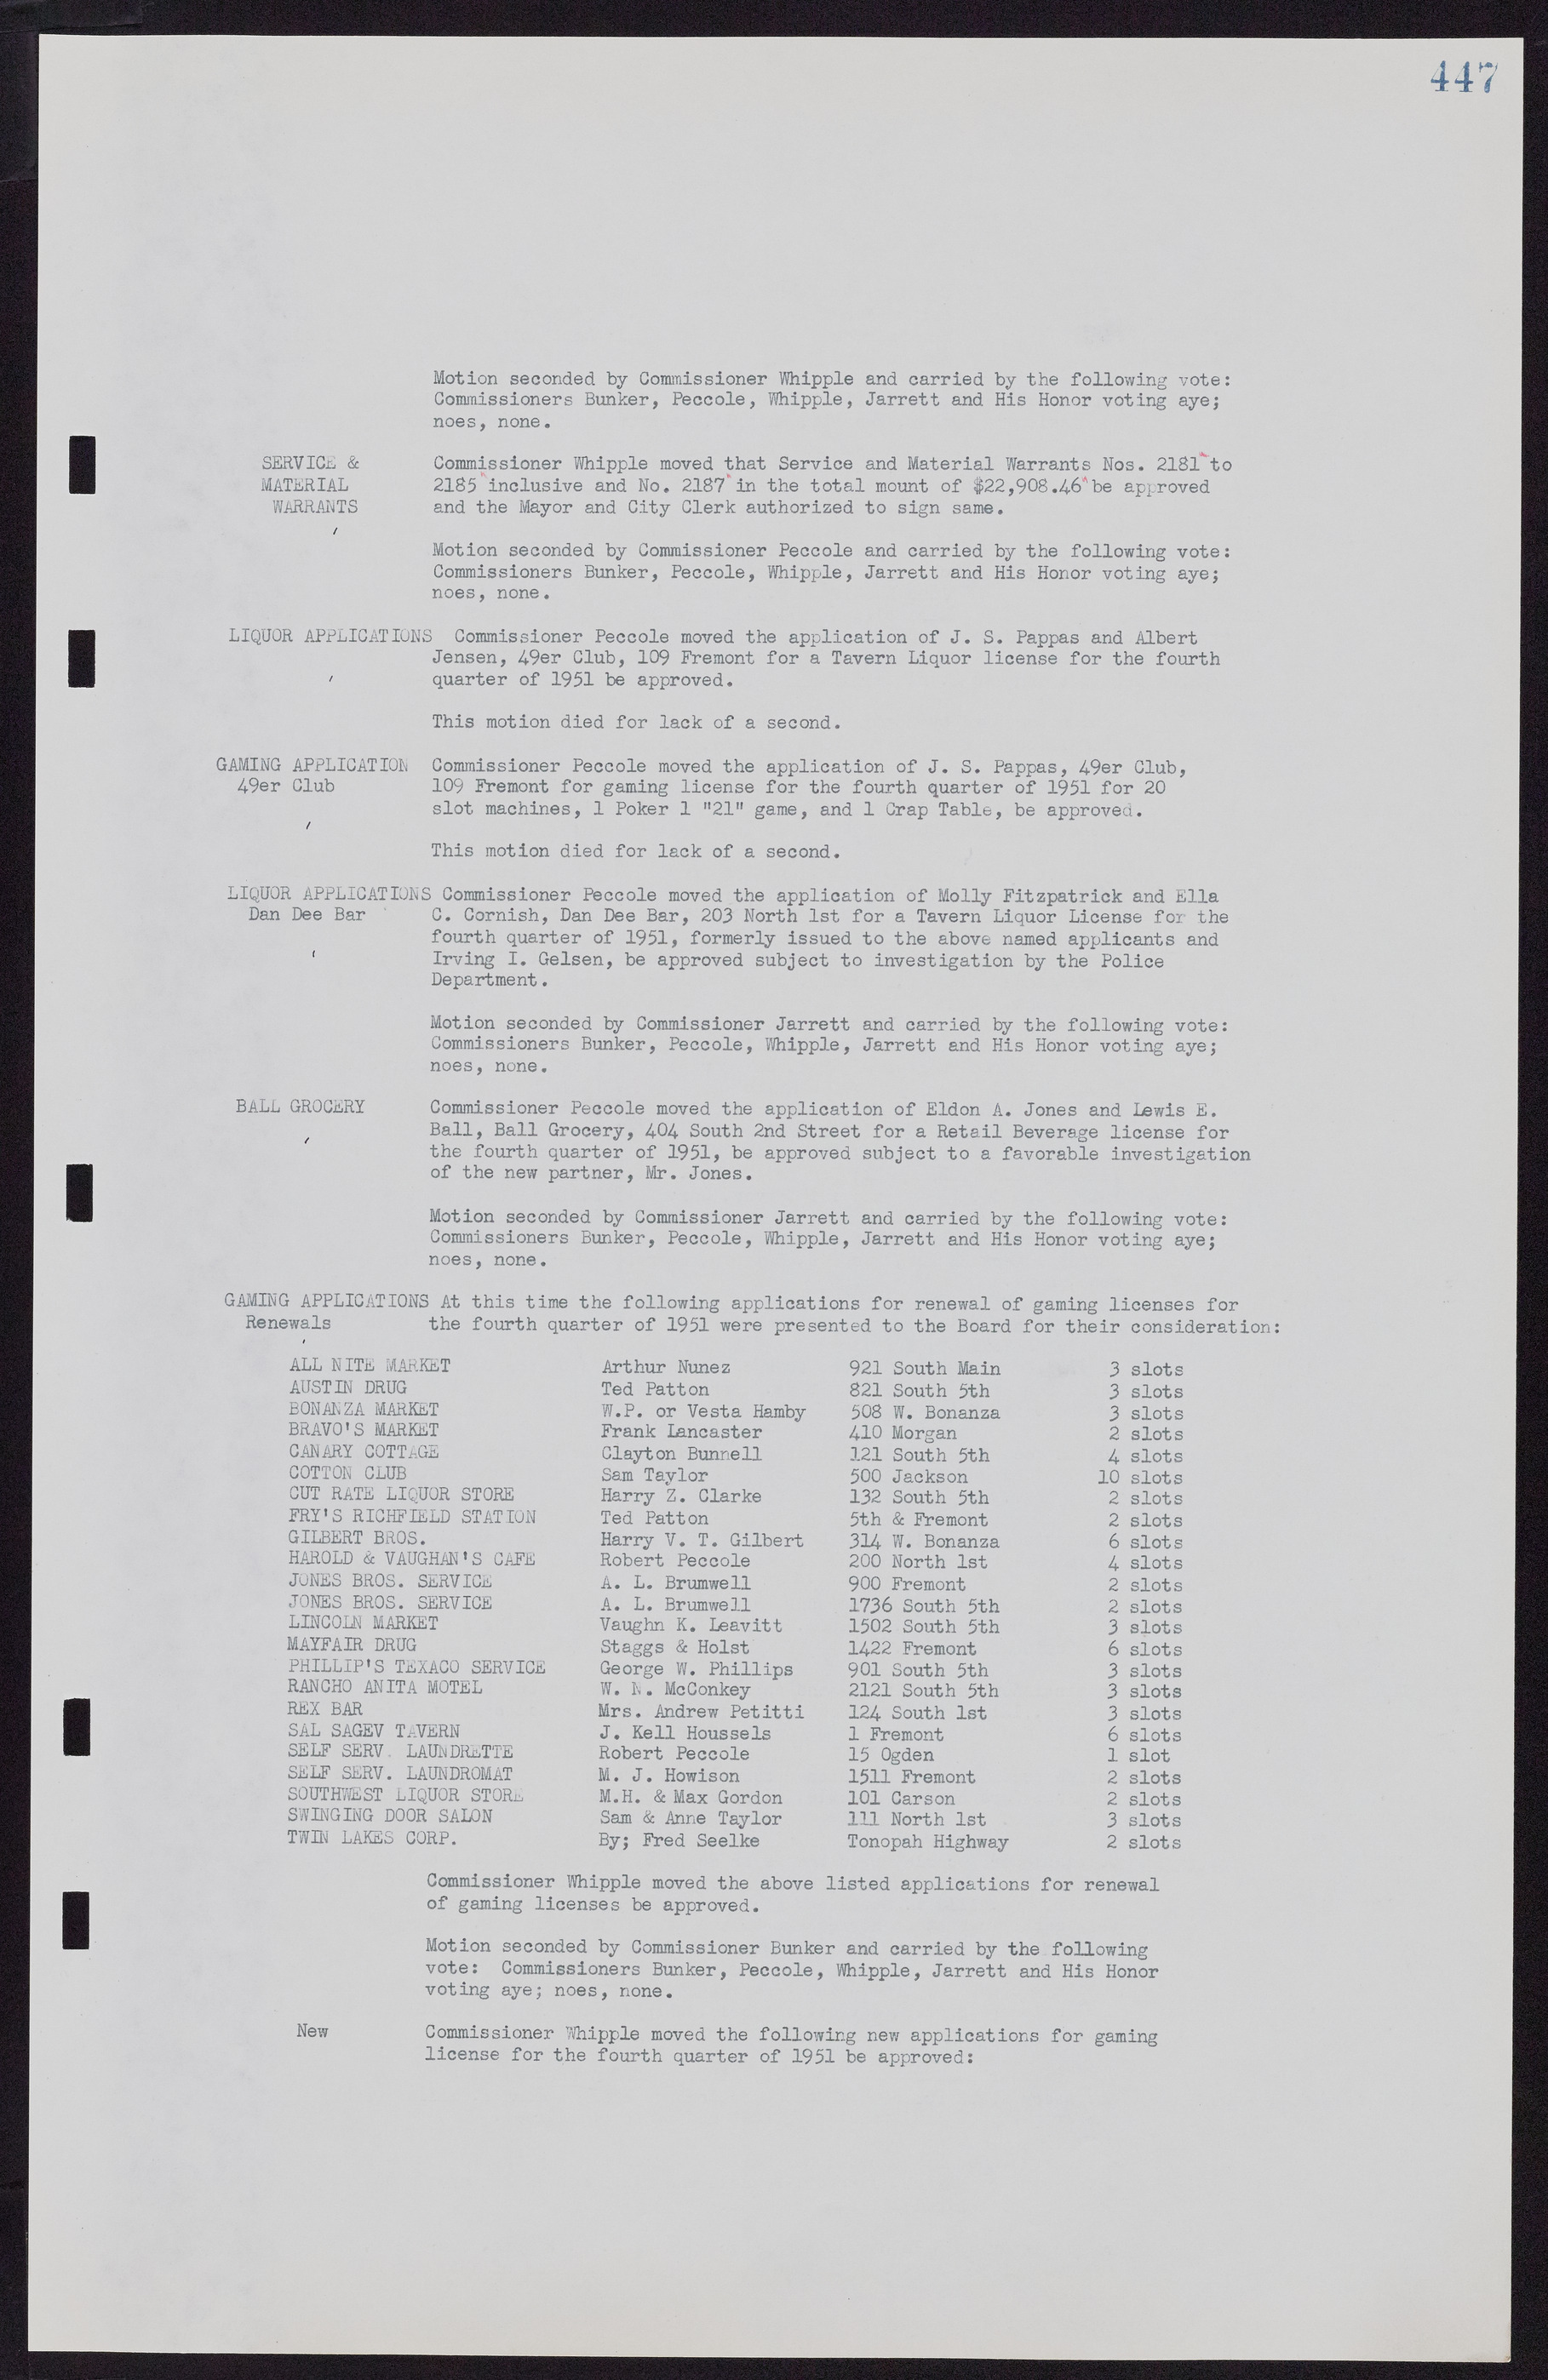 Las Vegas City Commission Minutes, November 7, 1949 to May 21, 1952, lvc000007-463